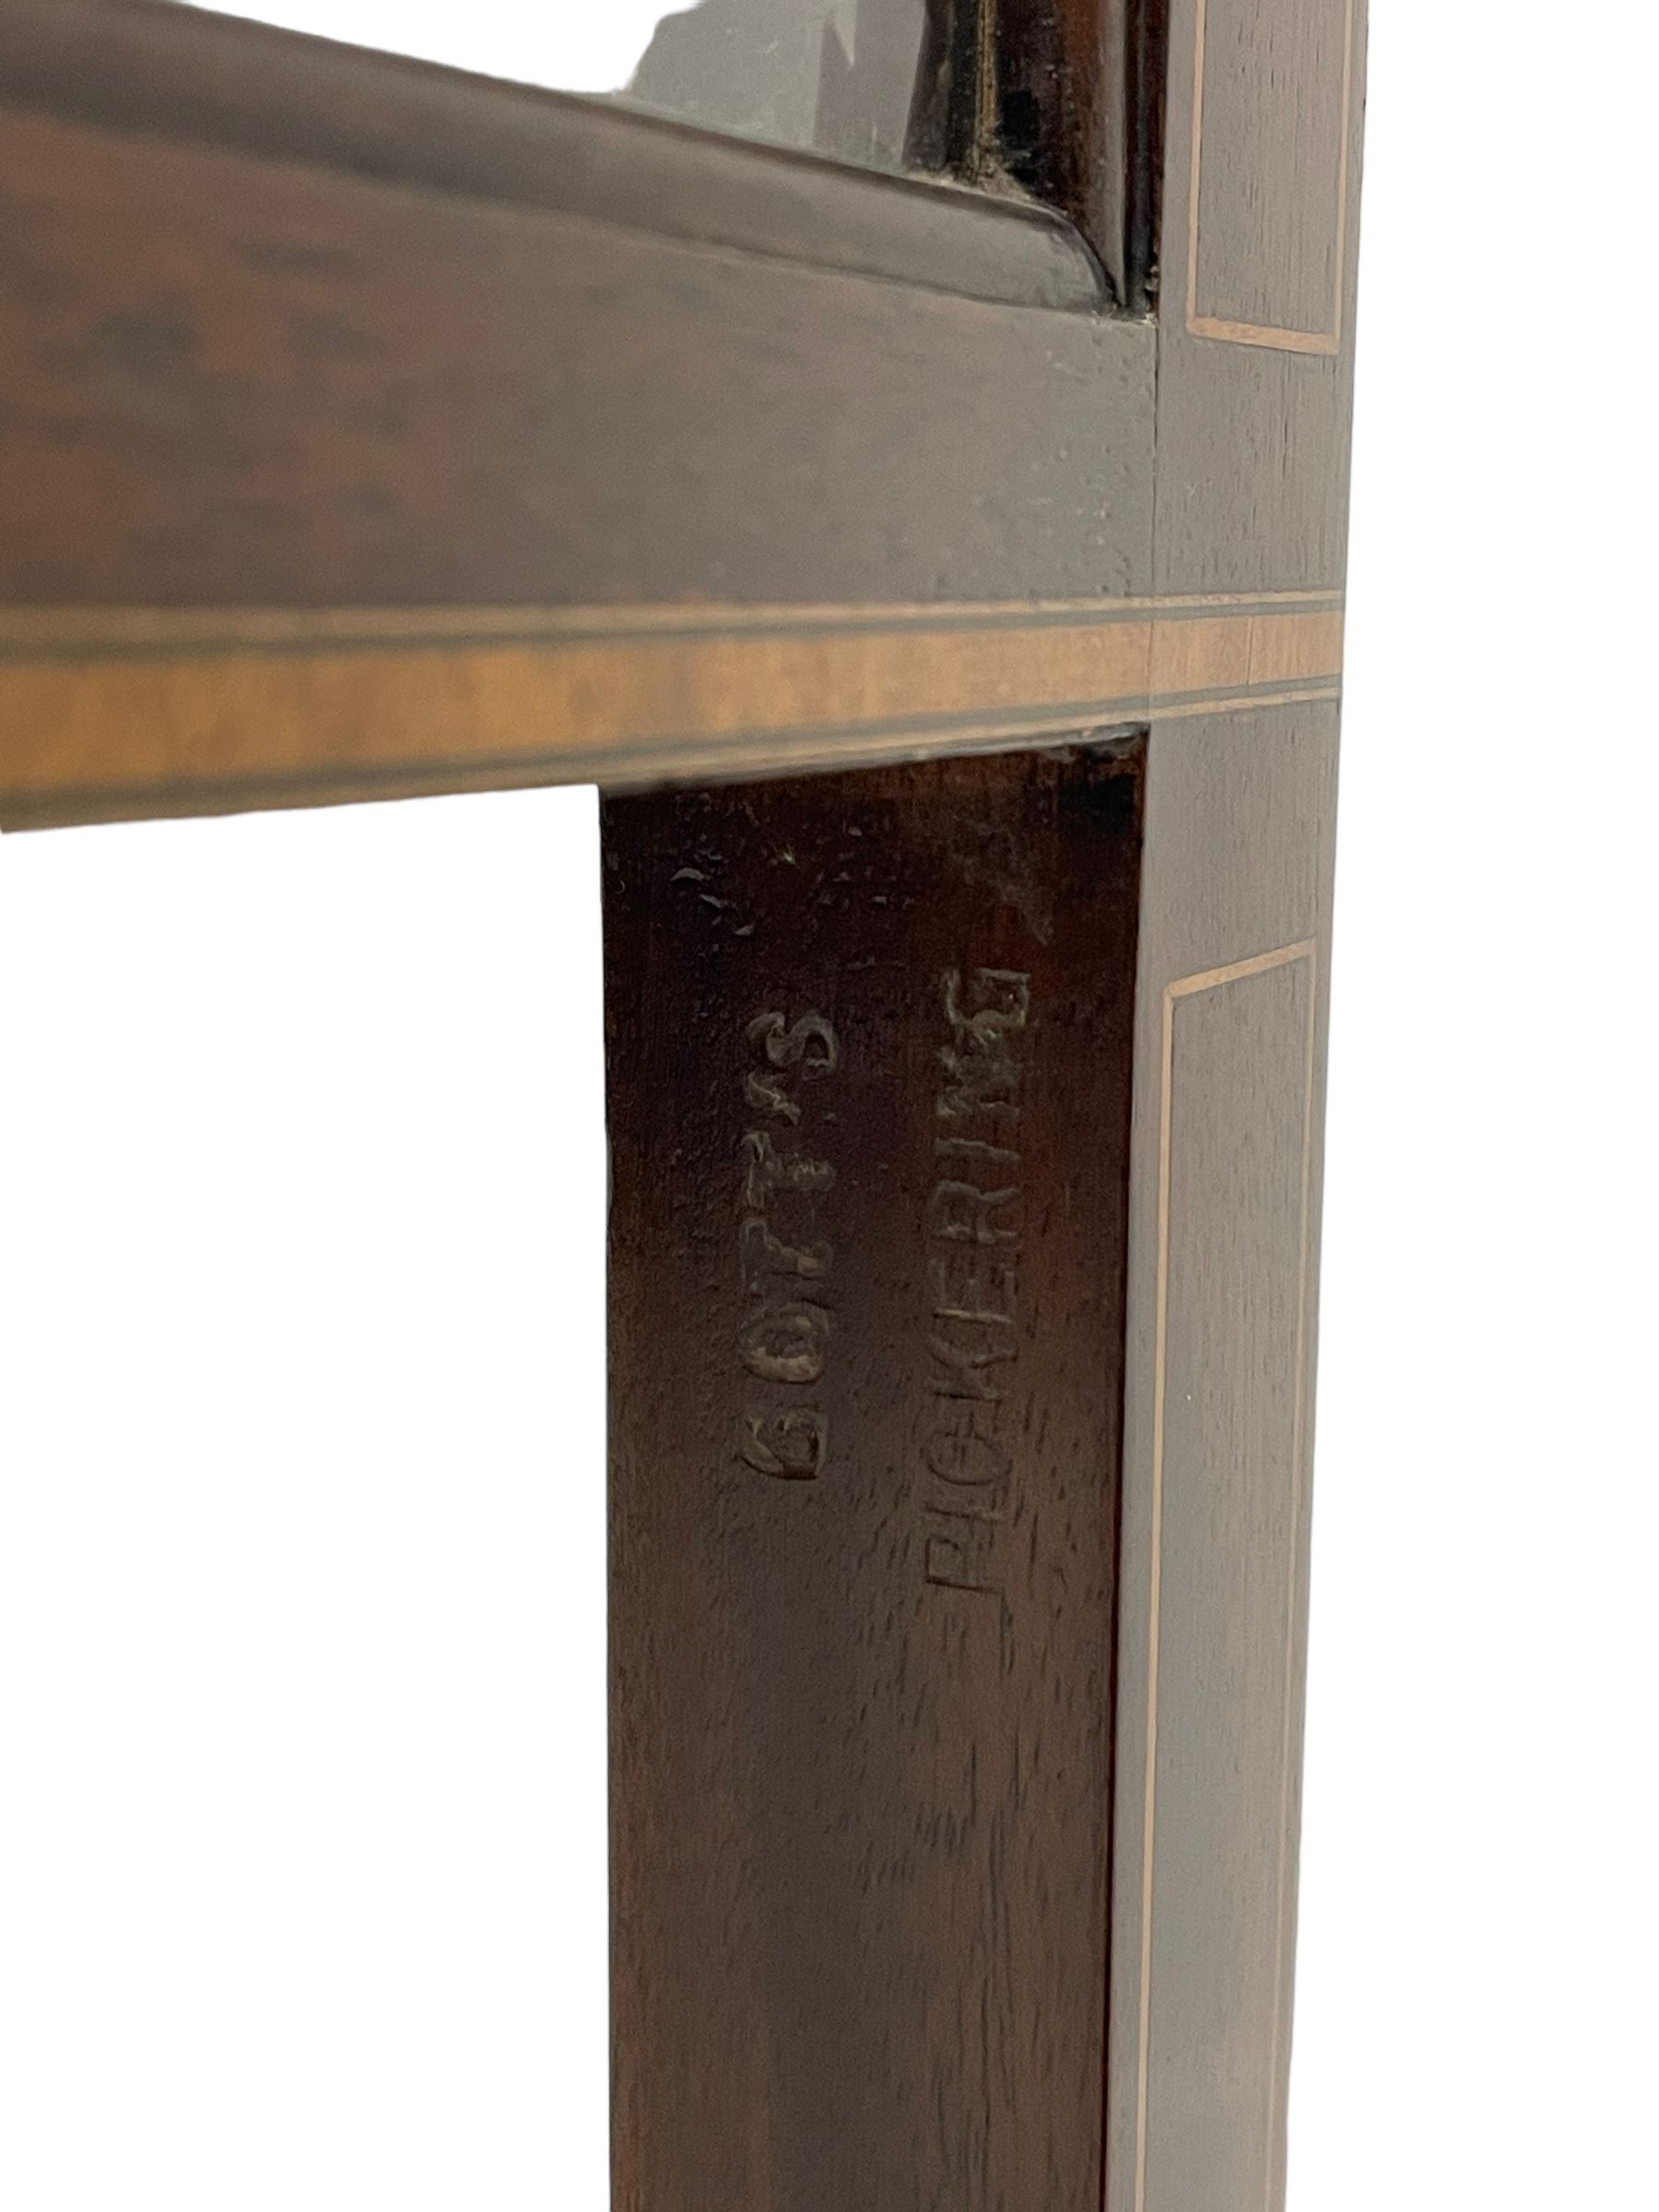 Gott's of Pickering - late 20th century Edwardian Revival mahogany Bijouterie table - Image 12 of 12